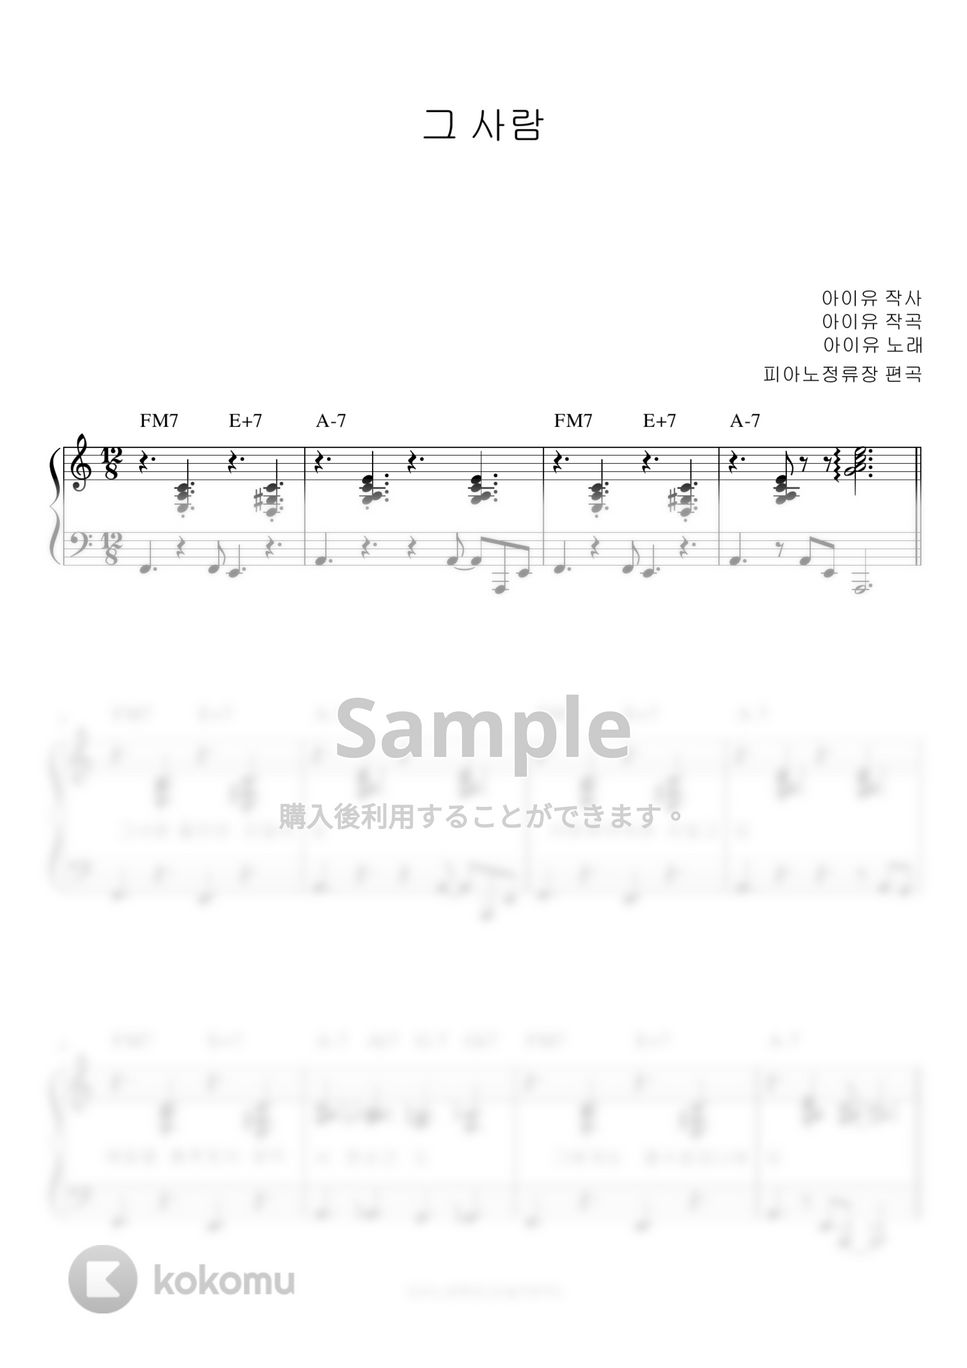 IU - The Visitor (伴奏楽譜) by pianojeongryujang